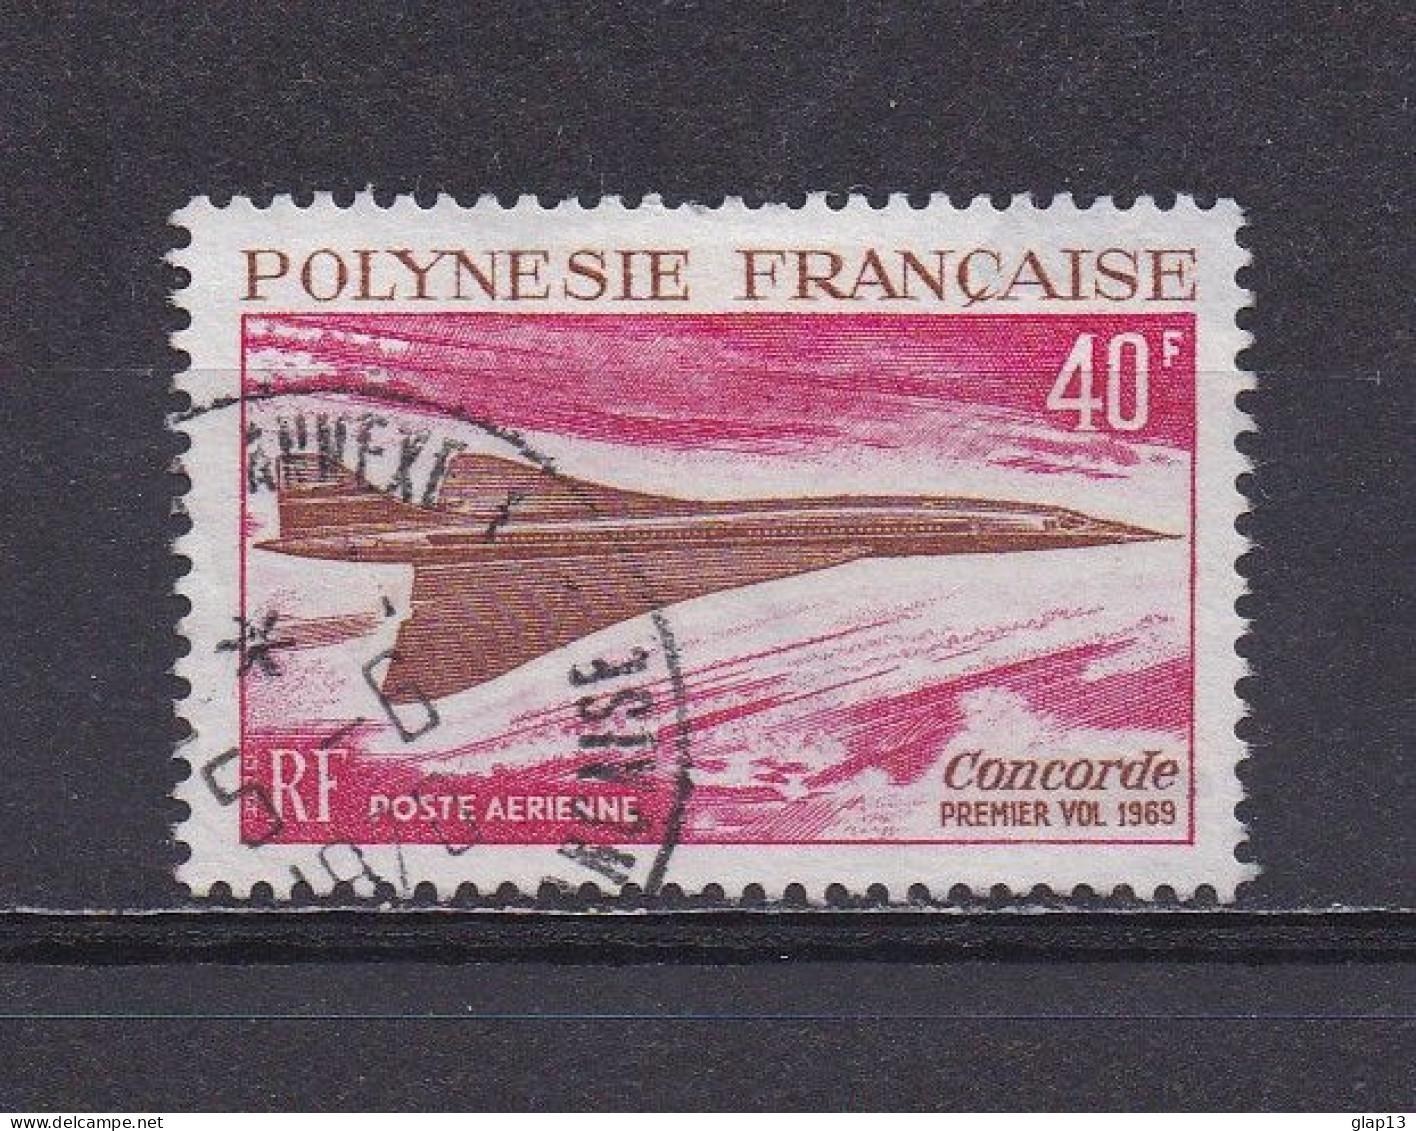 POLYNESIE FRANCAISE 1969 PA N°27 OBLITERE CONCORDE - Gebraucht